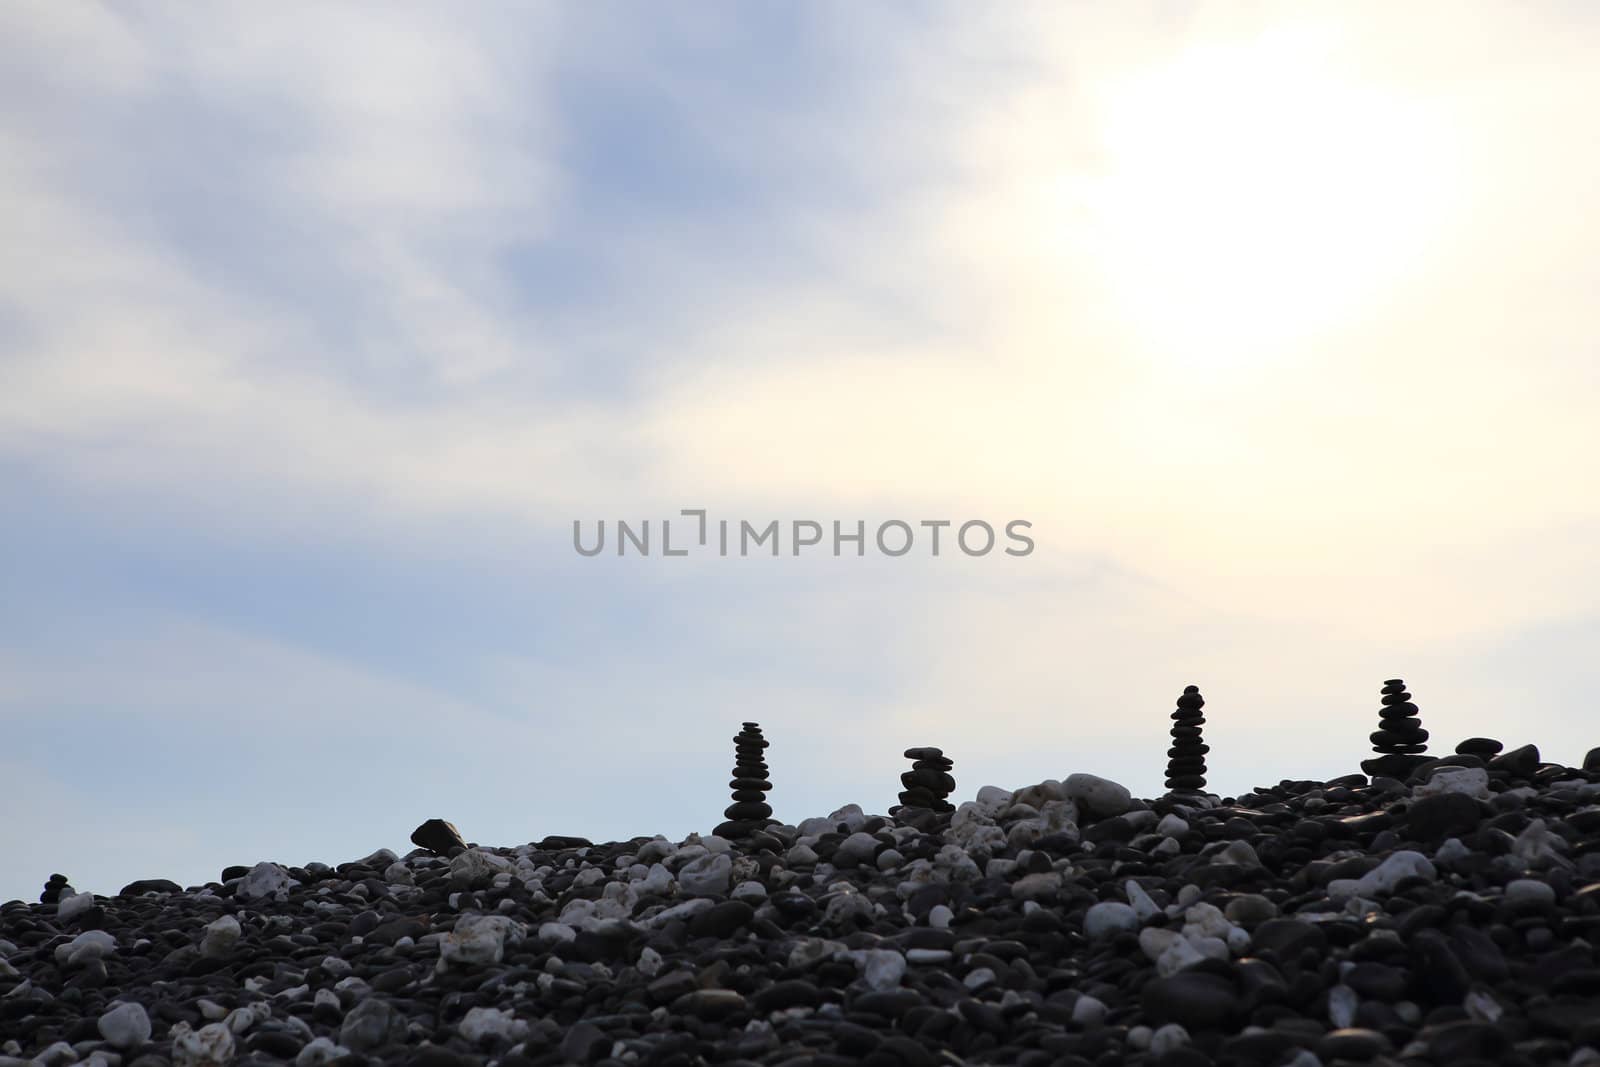 pebble on island, Lipe island, Thailand by rufous